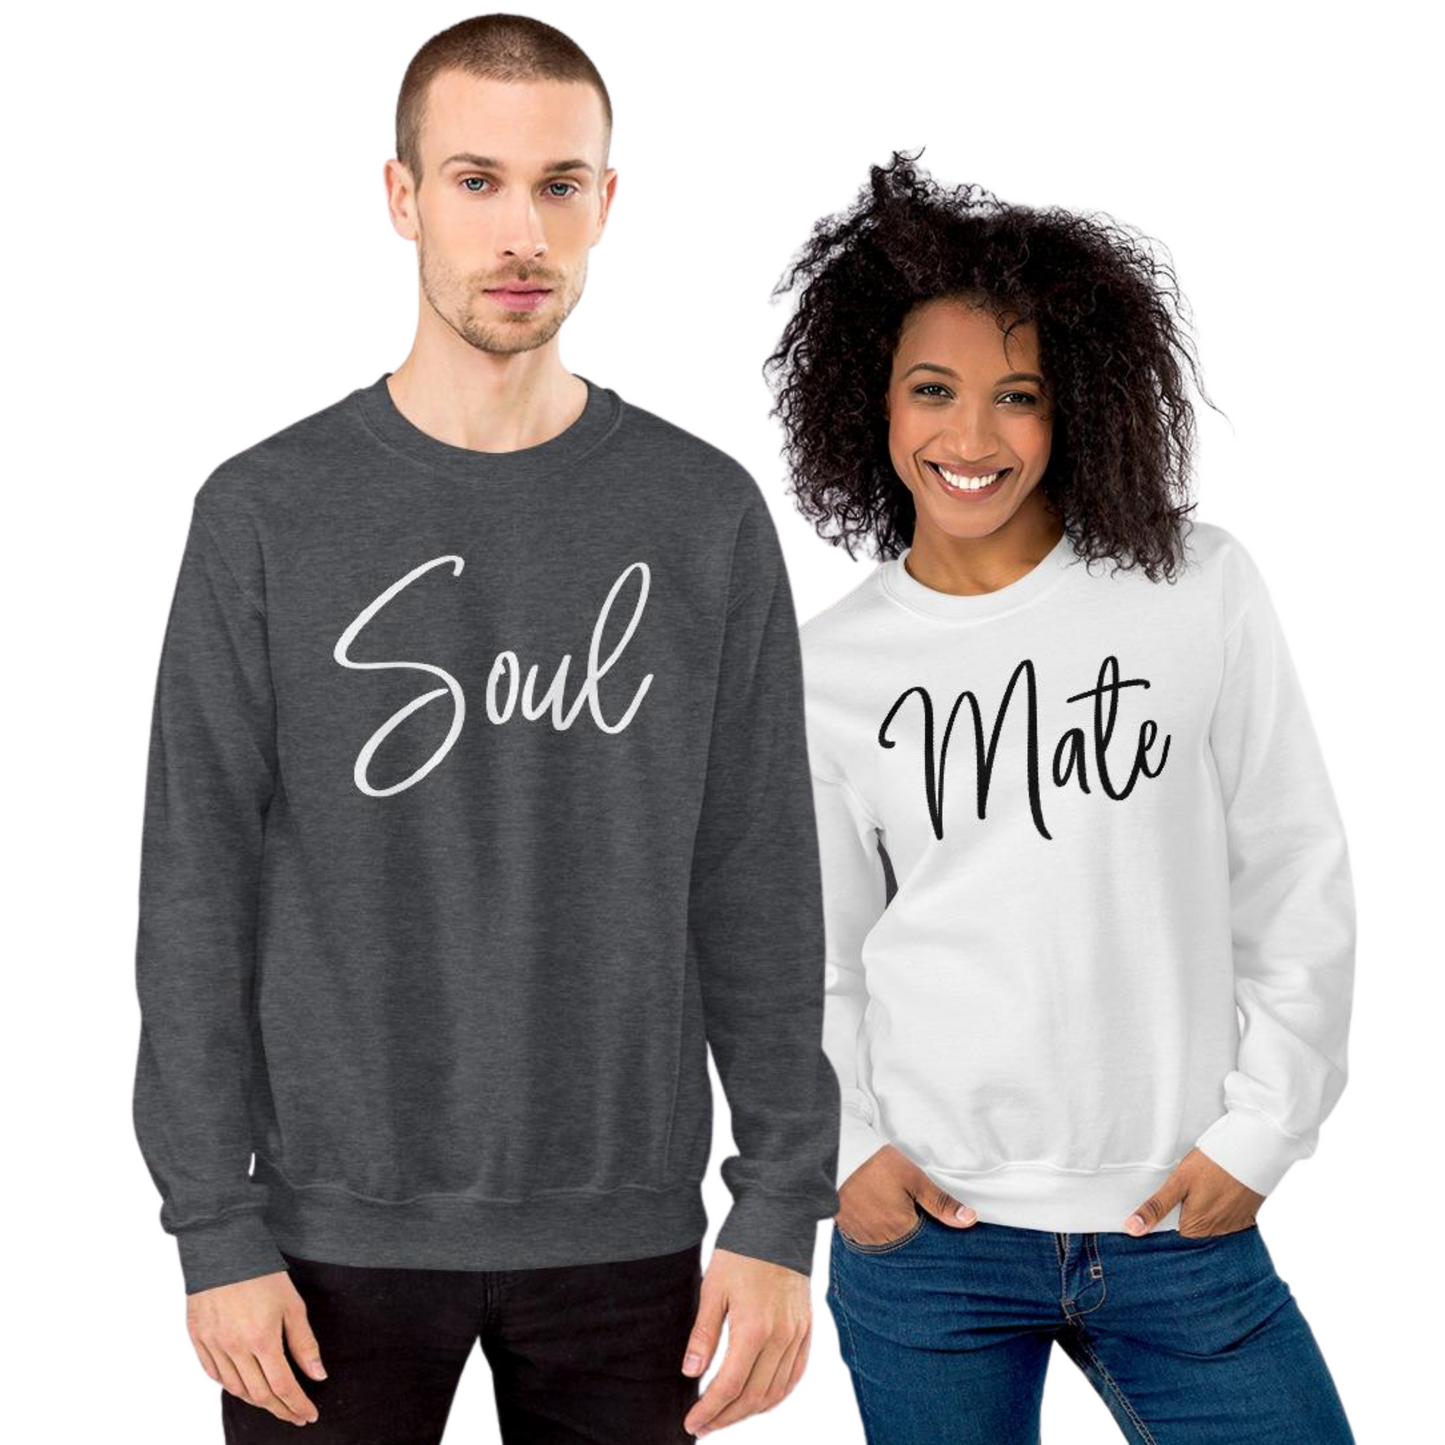 Soul Mate Couple Sweatshirts